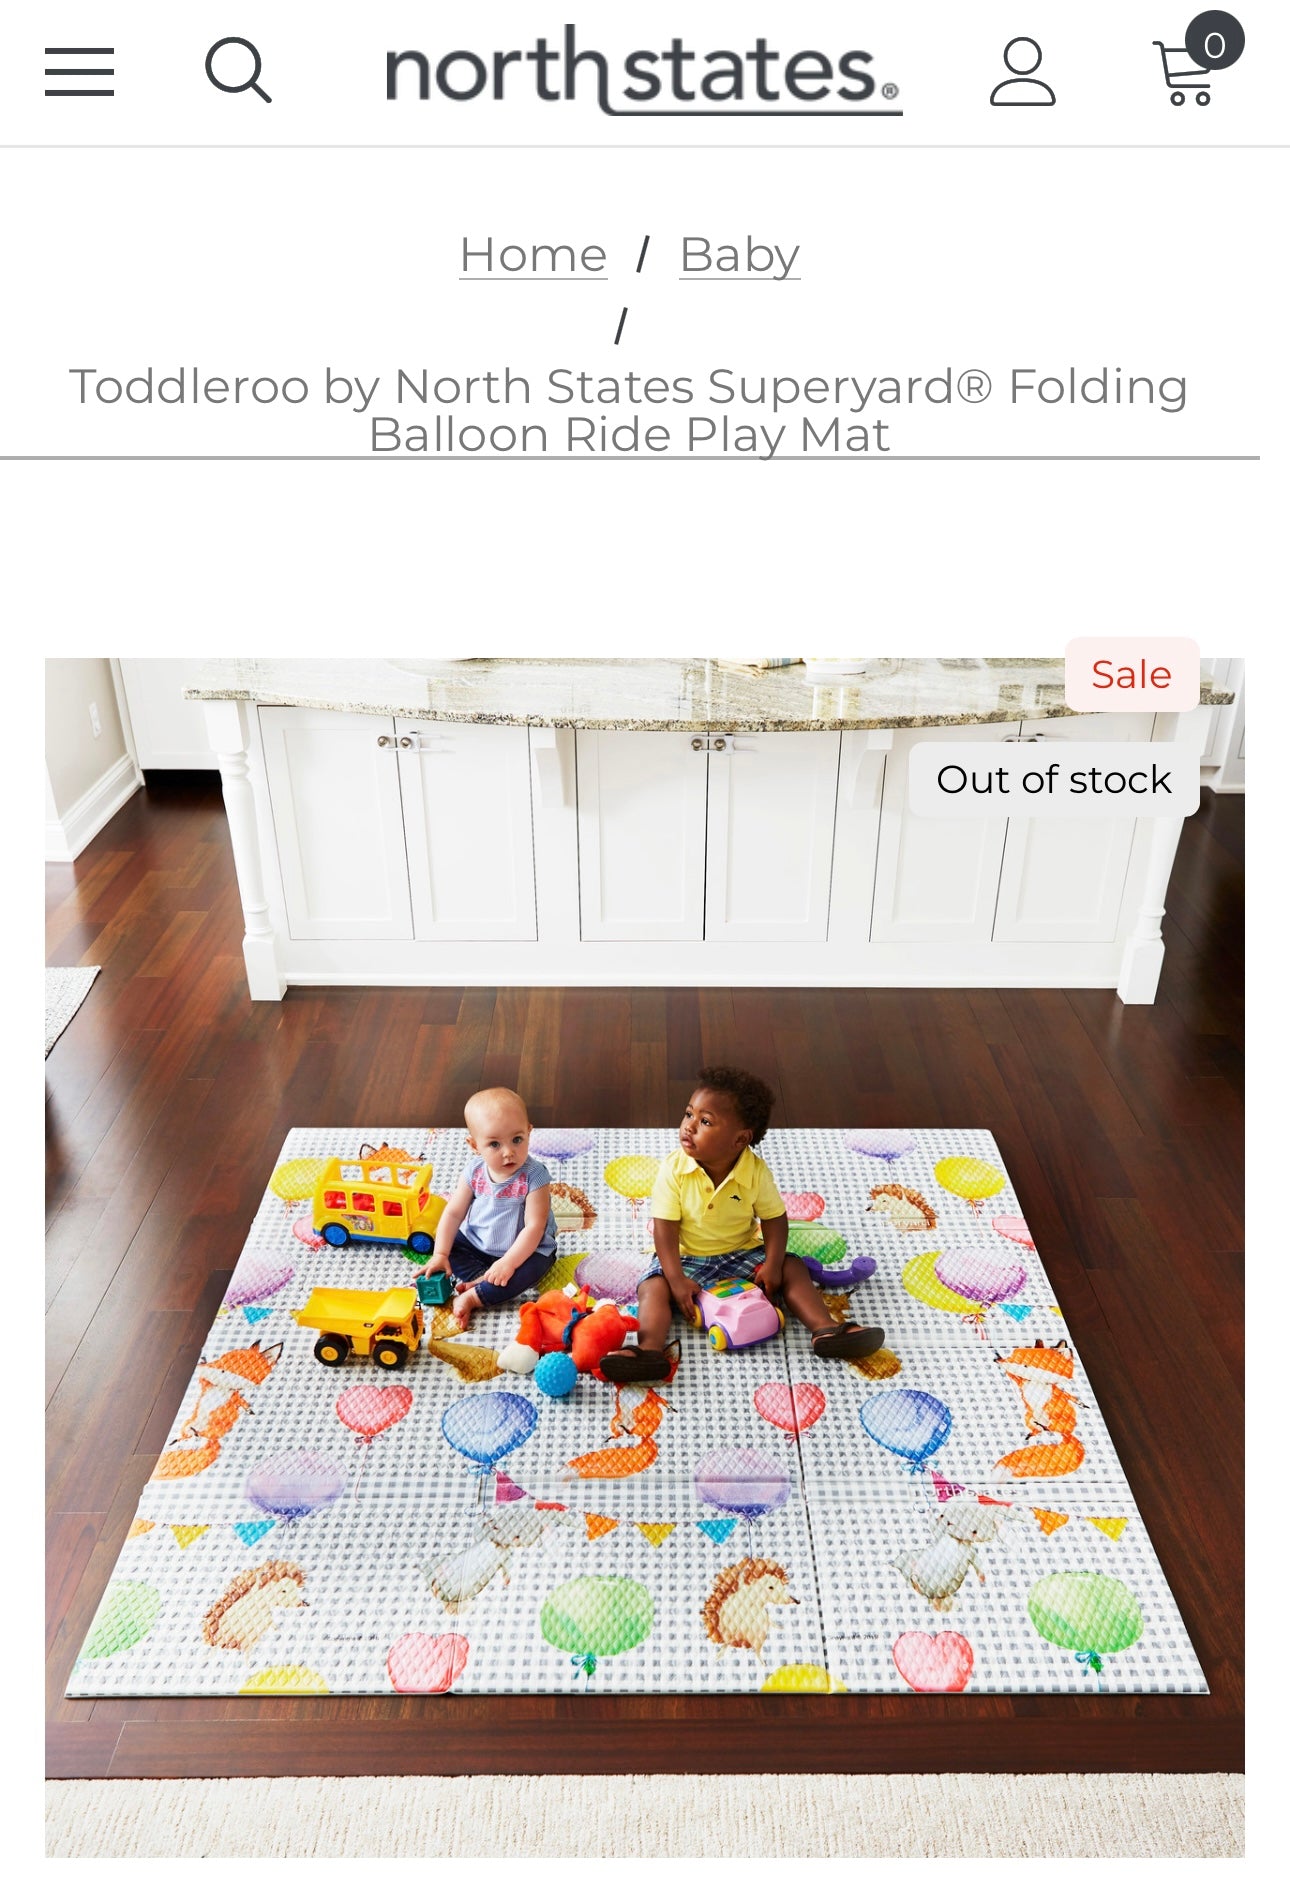 Toddleroo by North States Superyard Folding balloon ride play mat